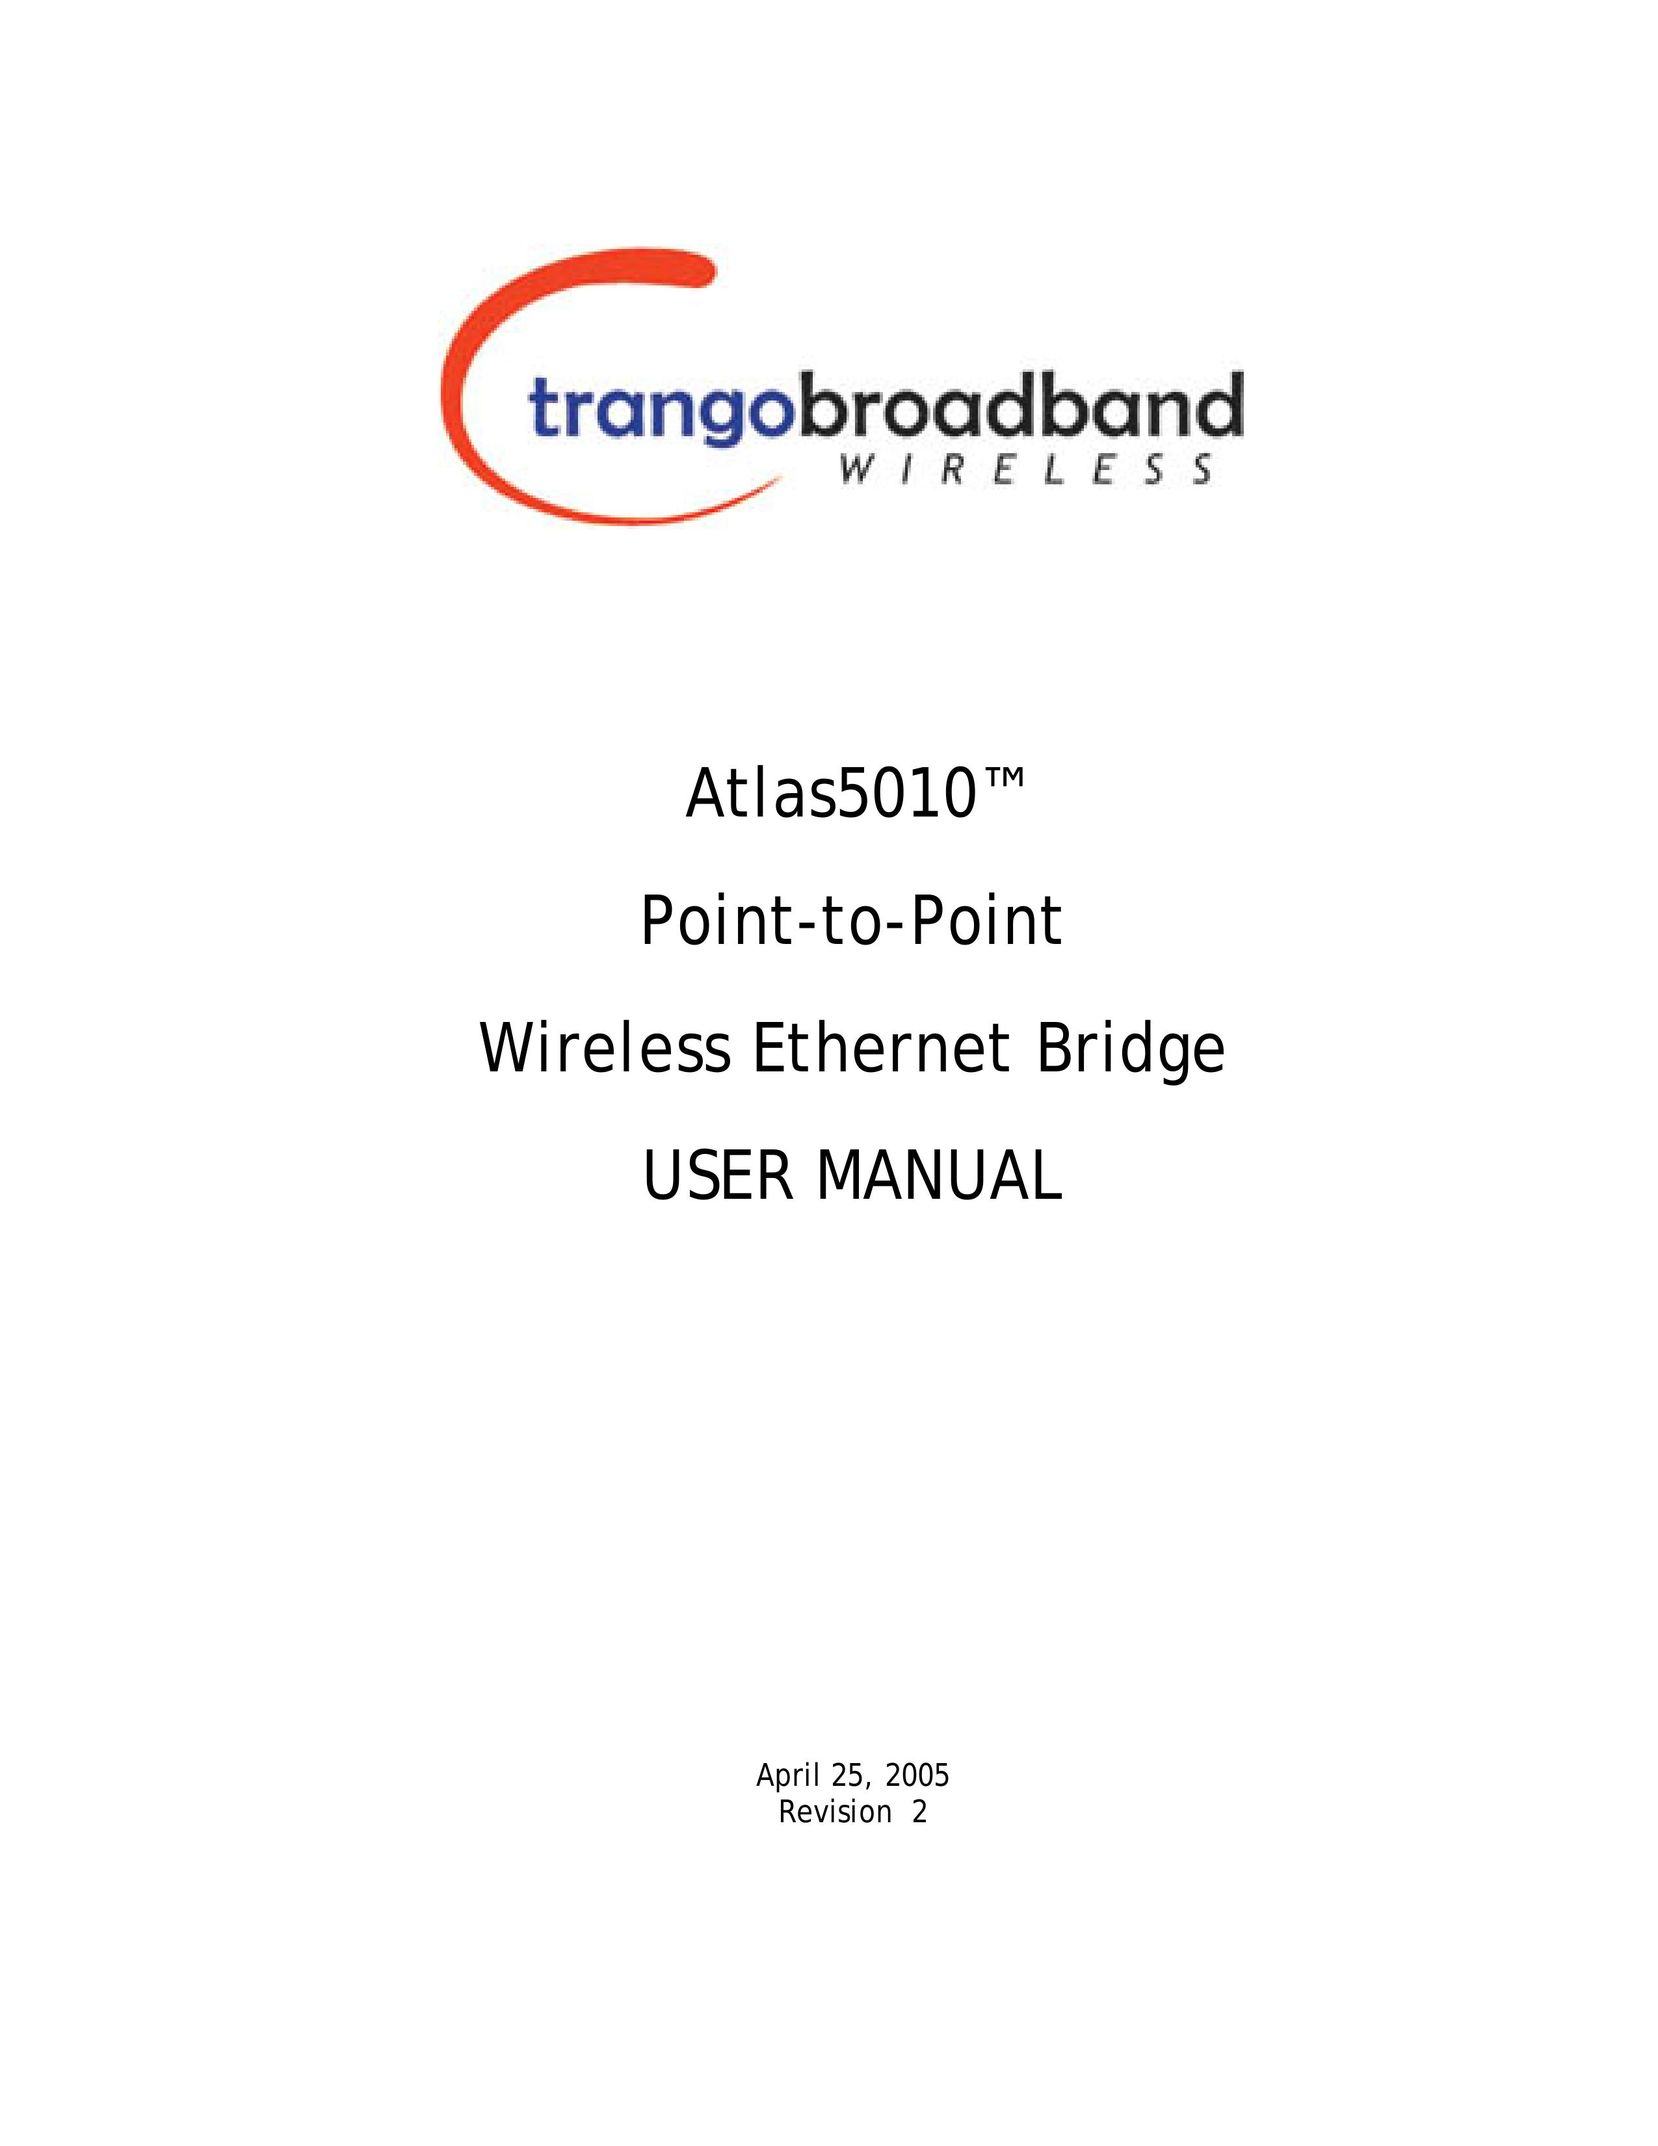 Trango Broadband Atlas5010 Network Router User Manual